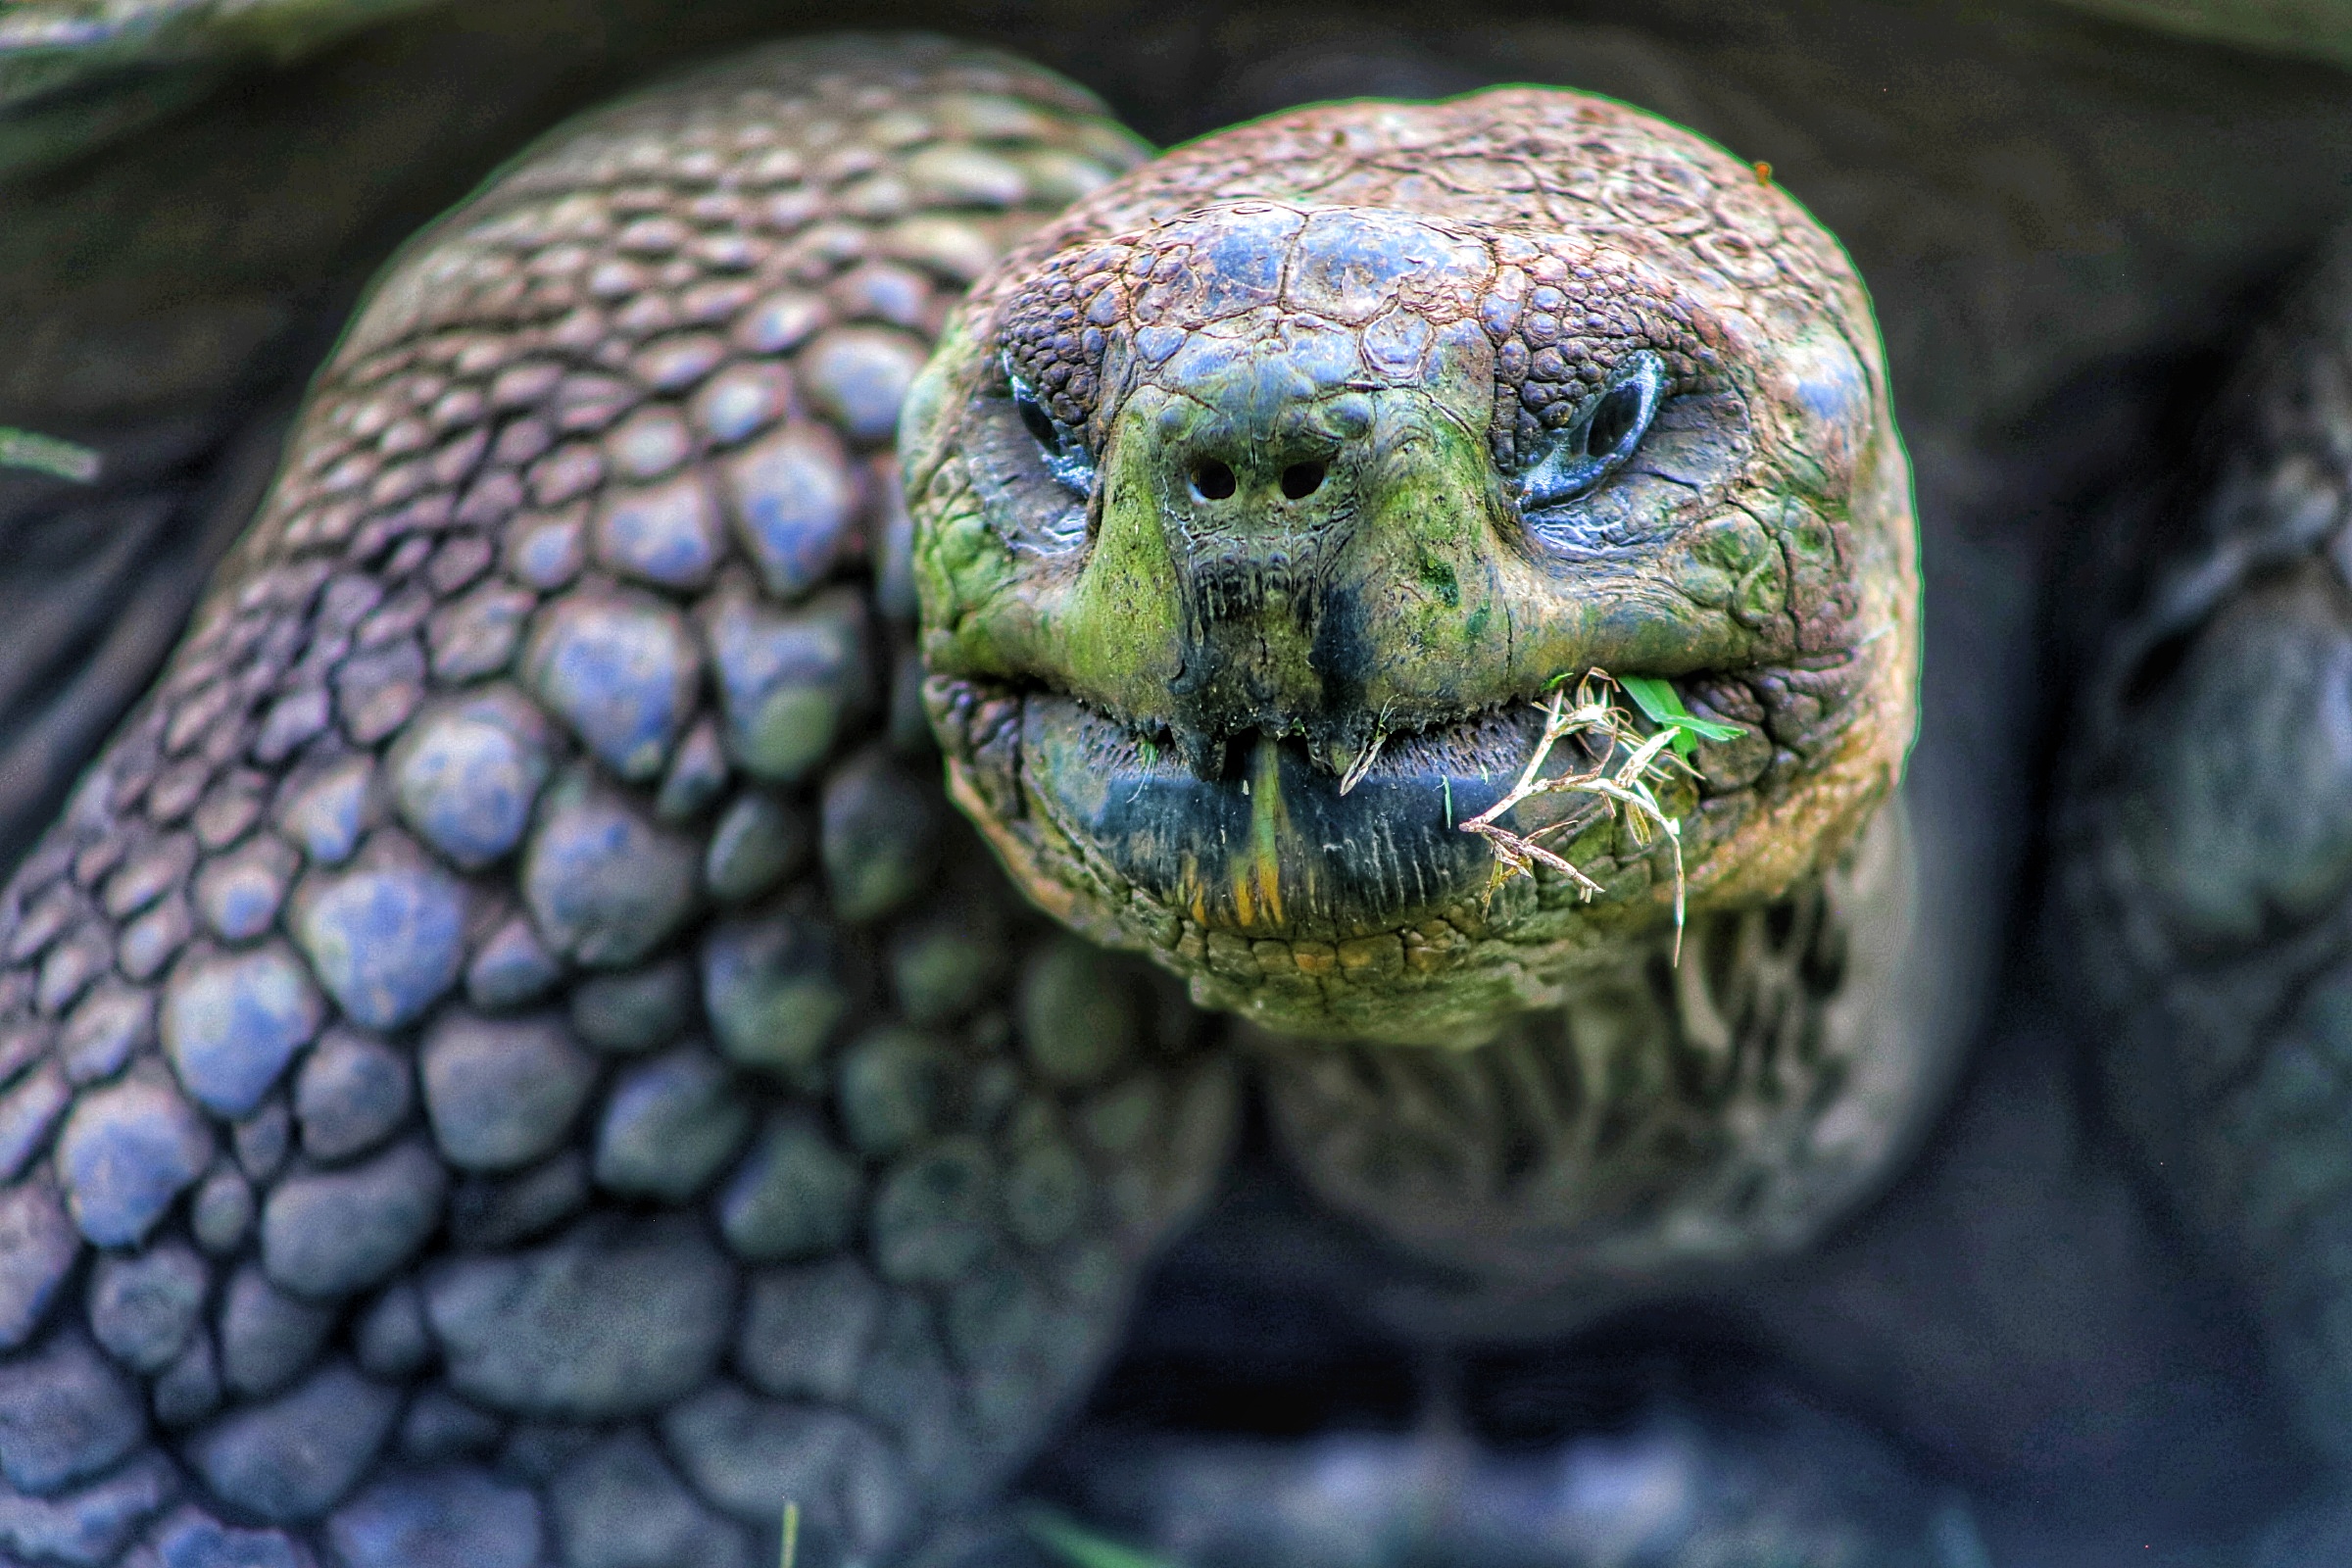 A giant sea tortoise